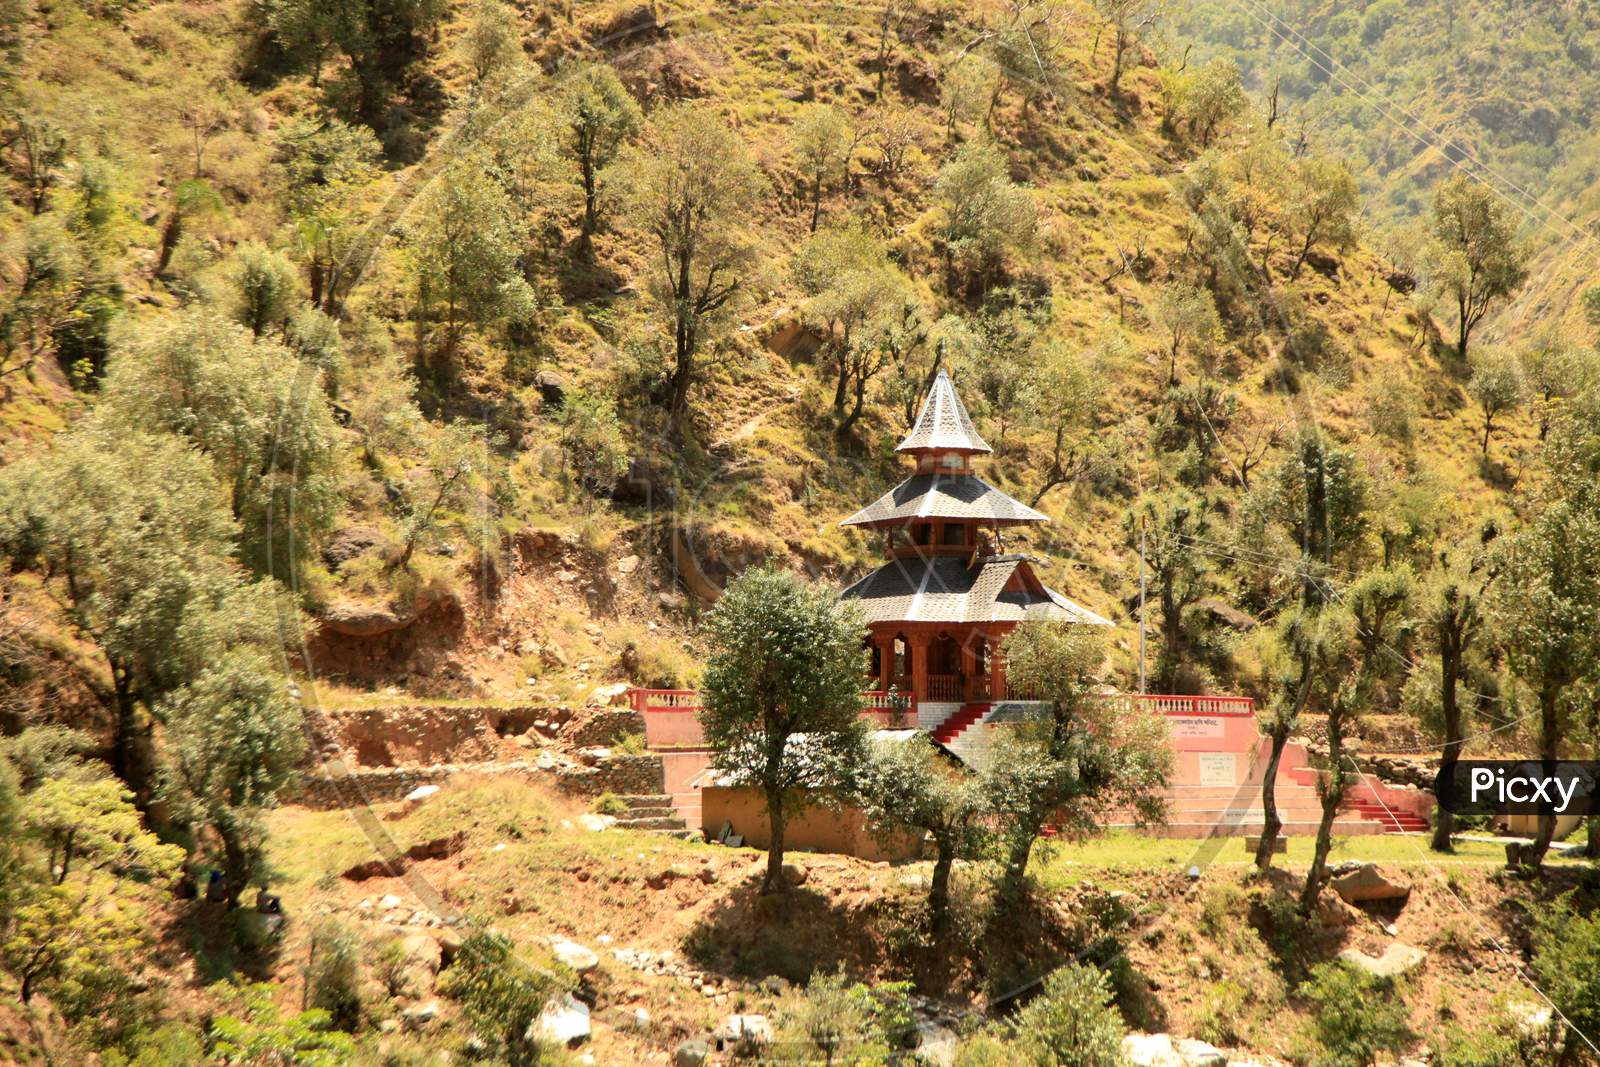 A House on a Mountain in Kumarhatti, Himachal Pradesh